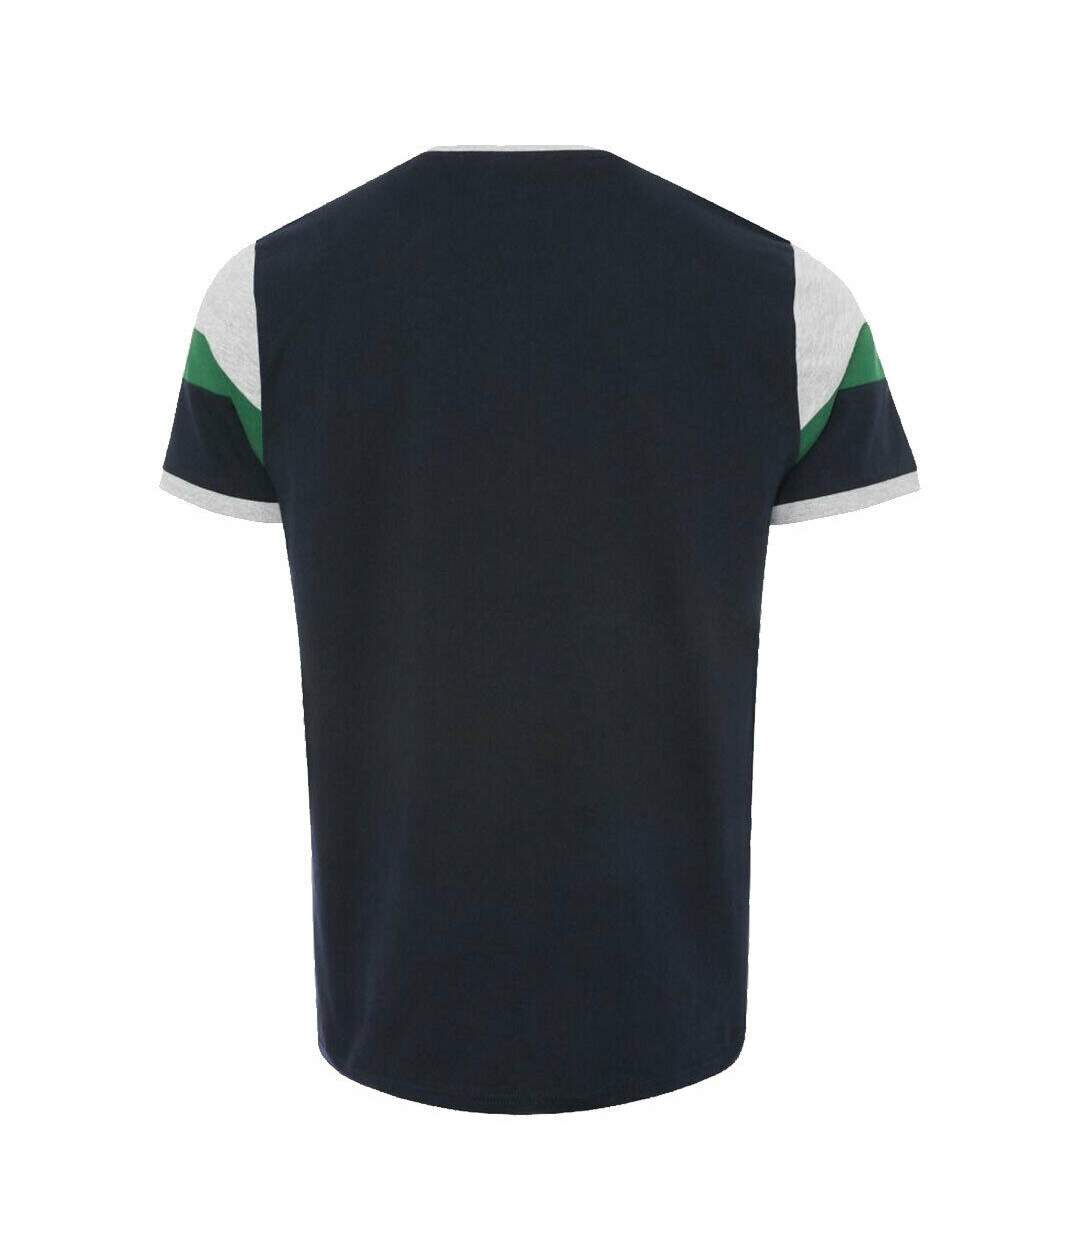 Liverpool FC Mens Panelled T-Shirt (Navy/Green/Grey Marl) - UTTA7880